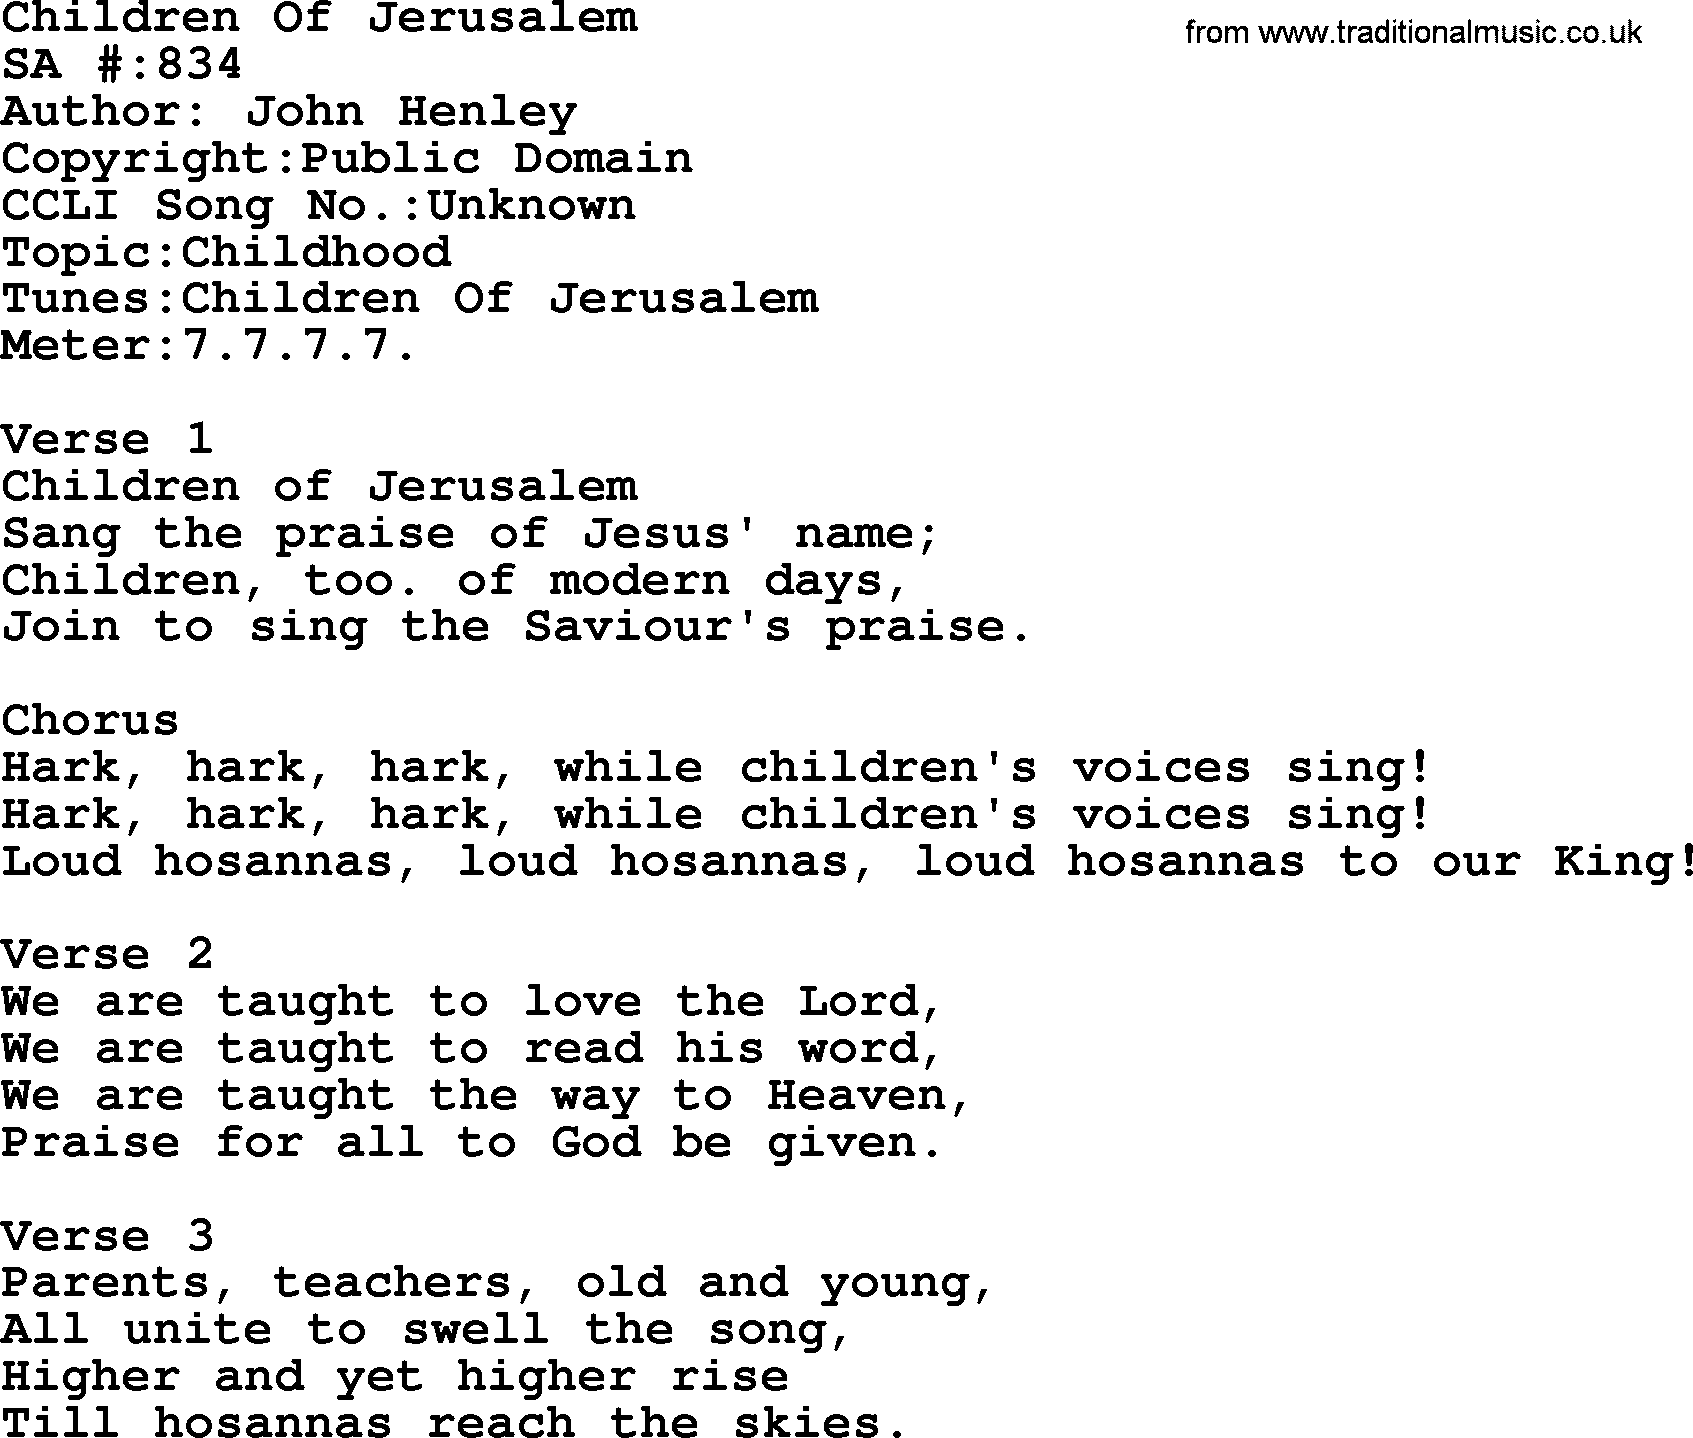 Salvation Army Hymnal, title: Children Of Jerusalem, with lyrics and PDF,